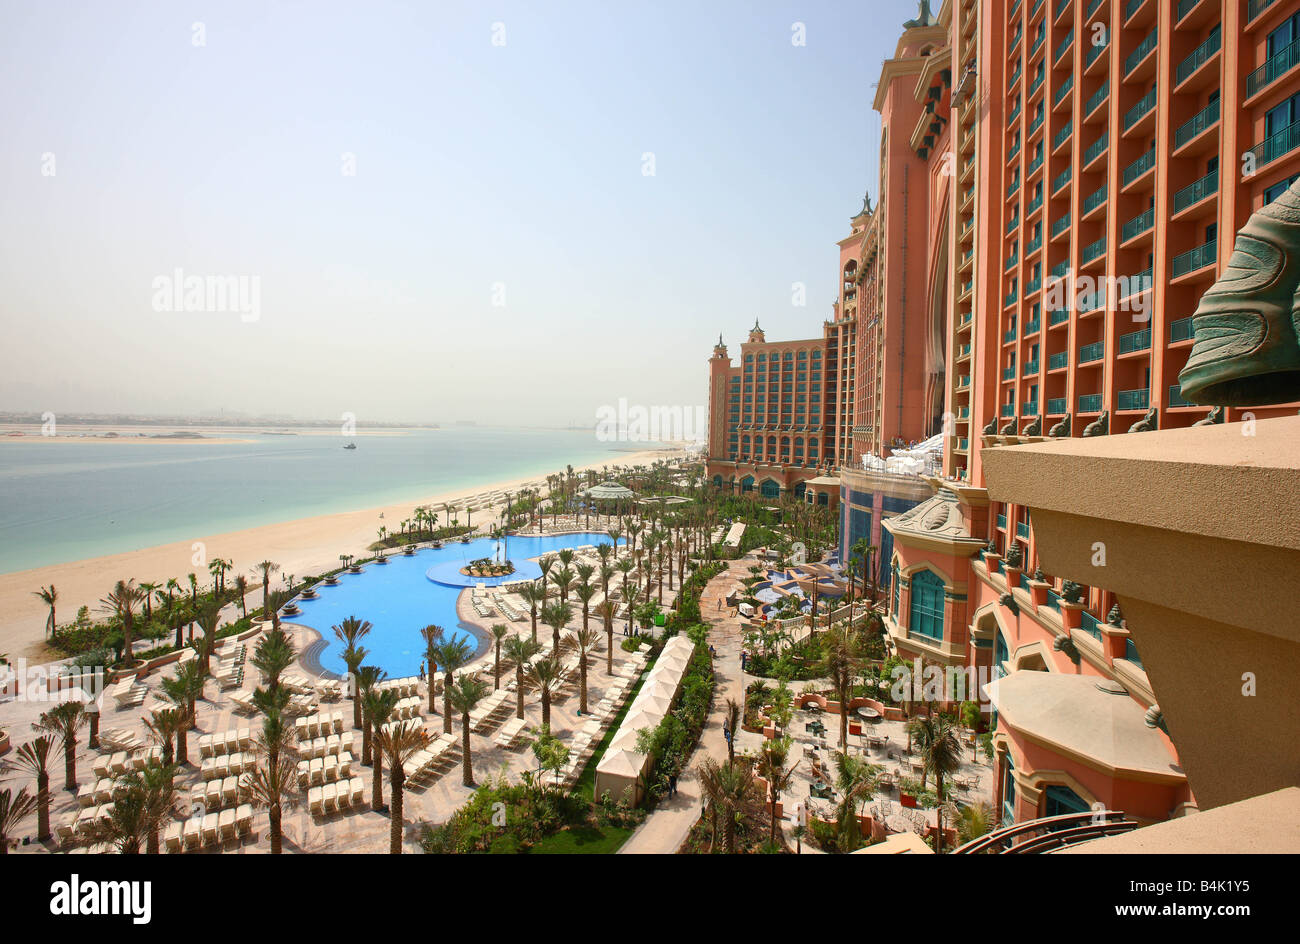 Atlantis Hotel, The Palm, Dubai, United Arab Emirates. Stock Photo